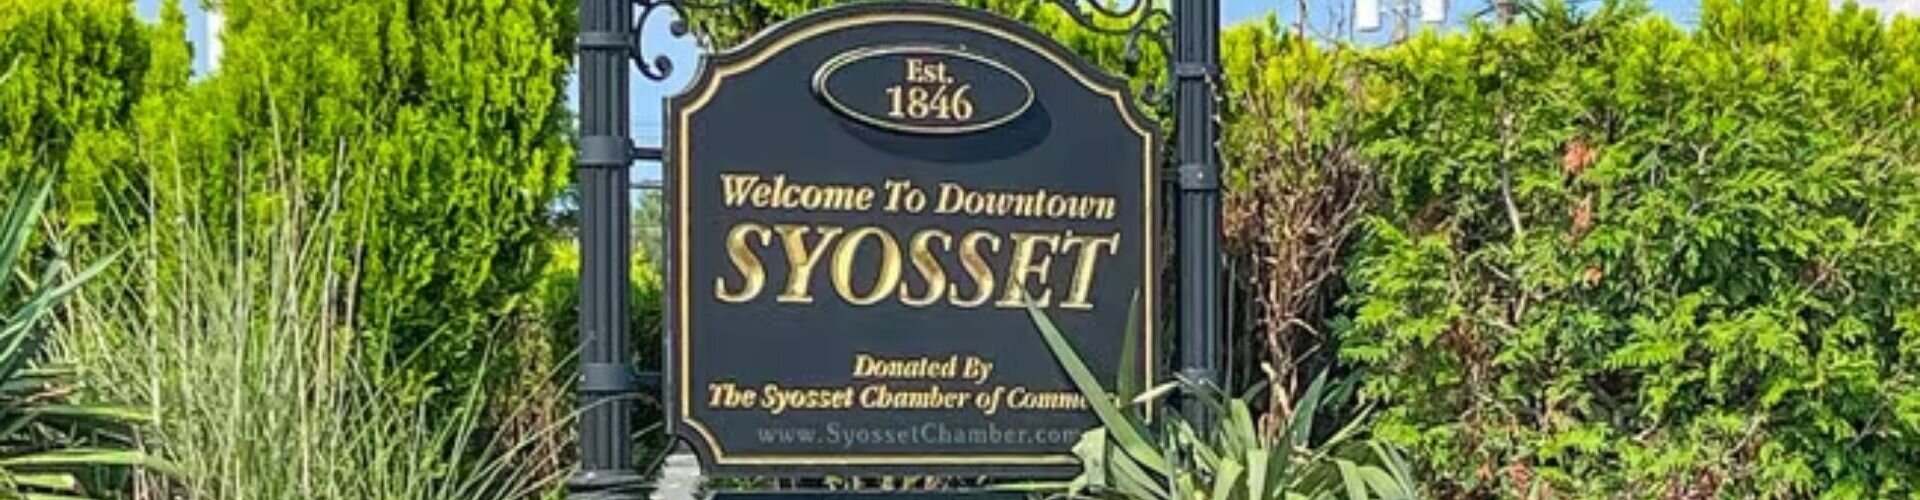 Syosset - Cash Buyers in Long Island